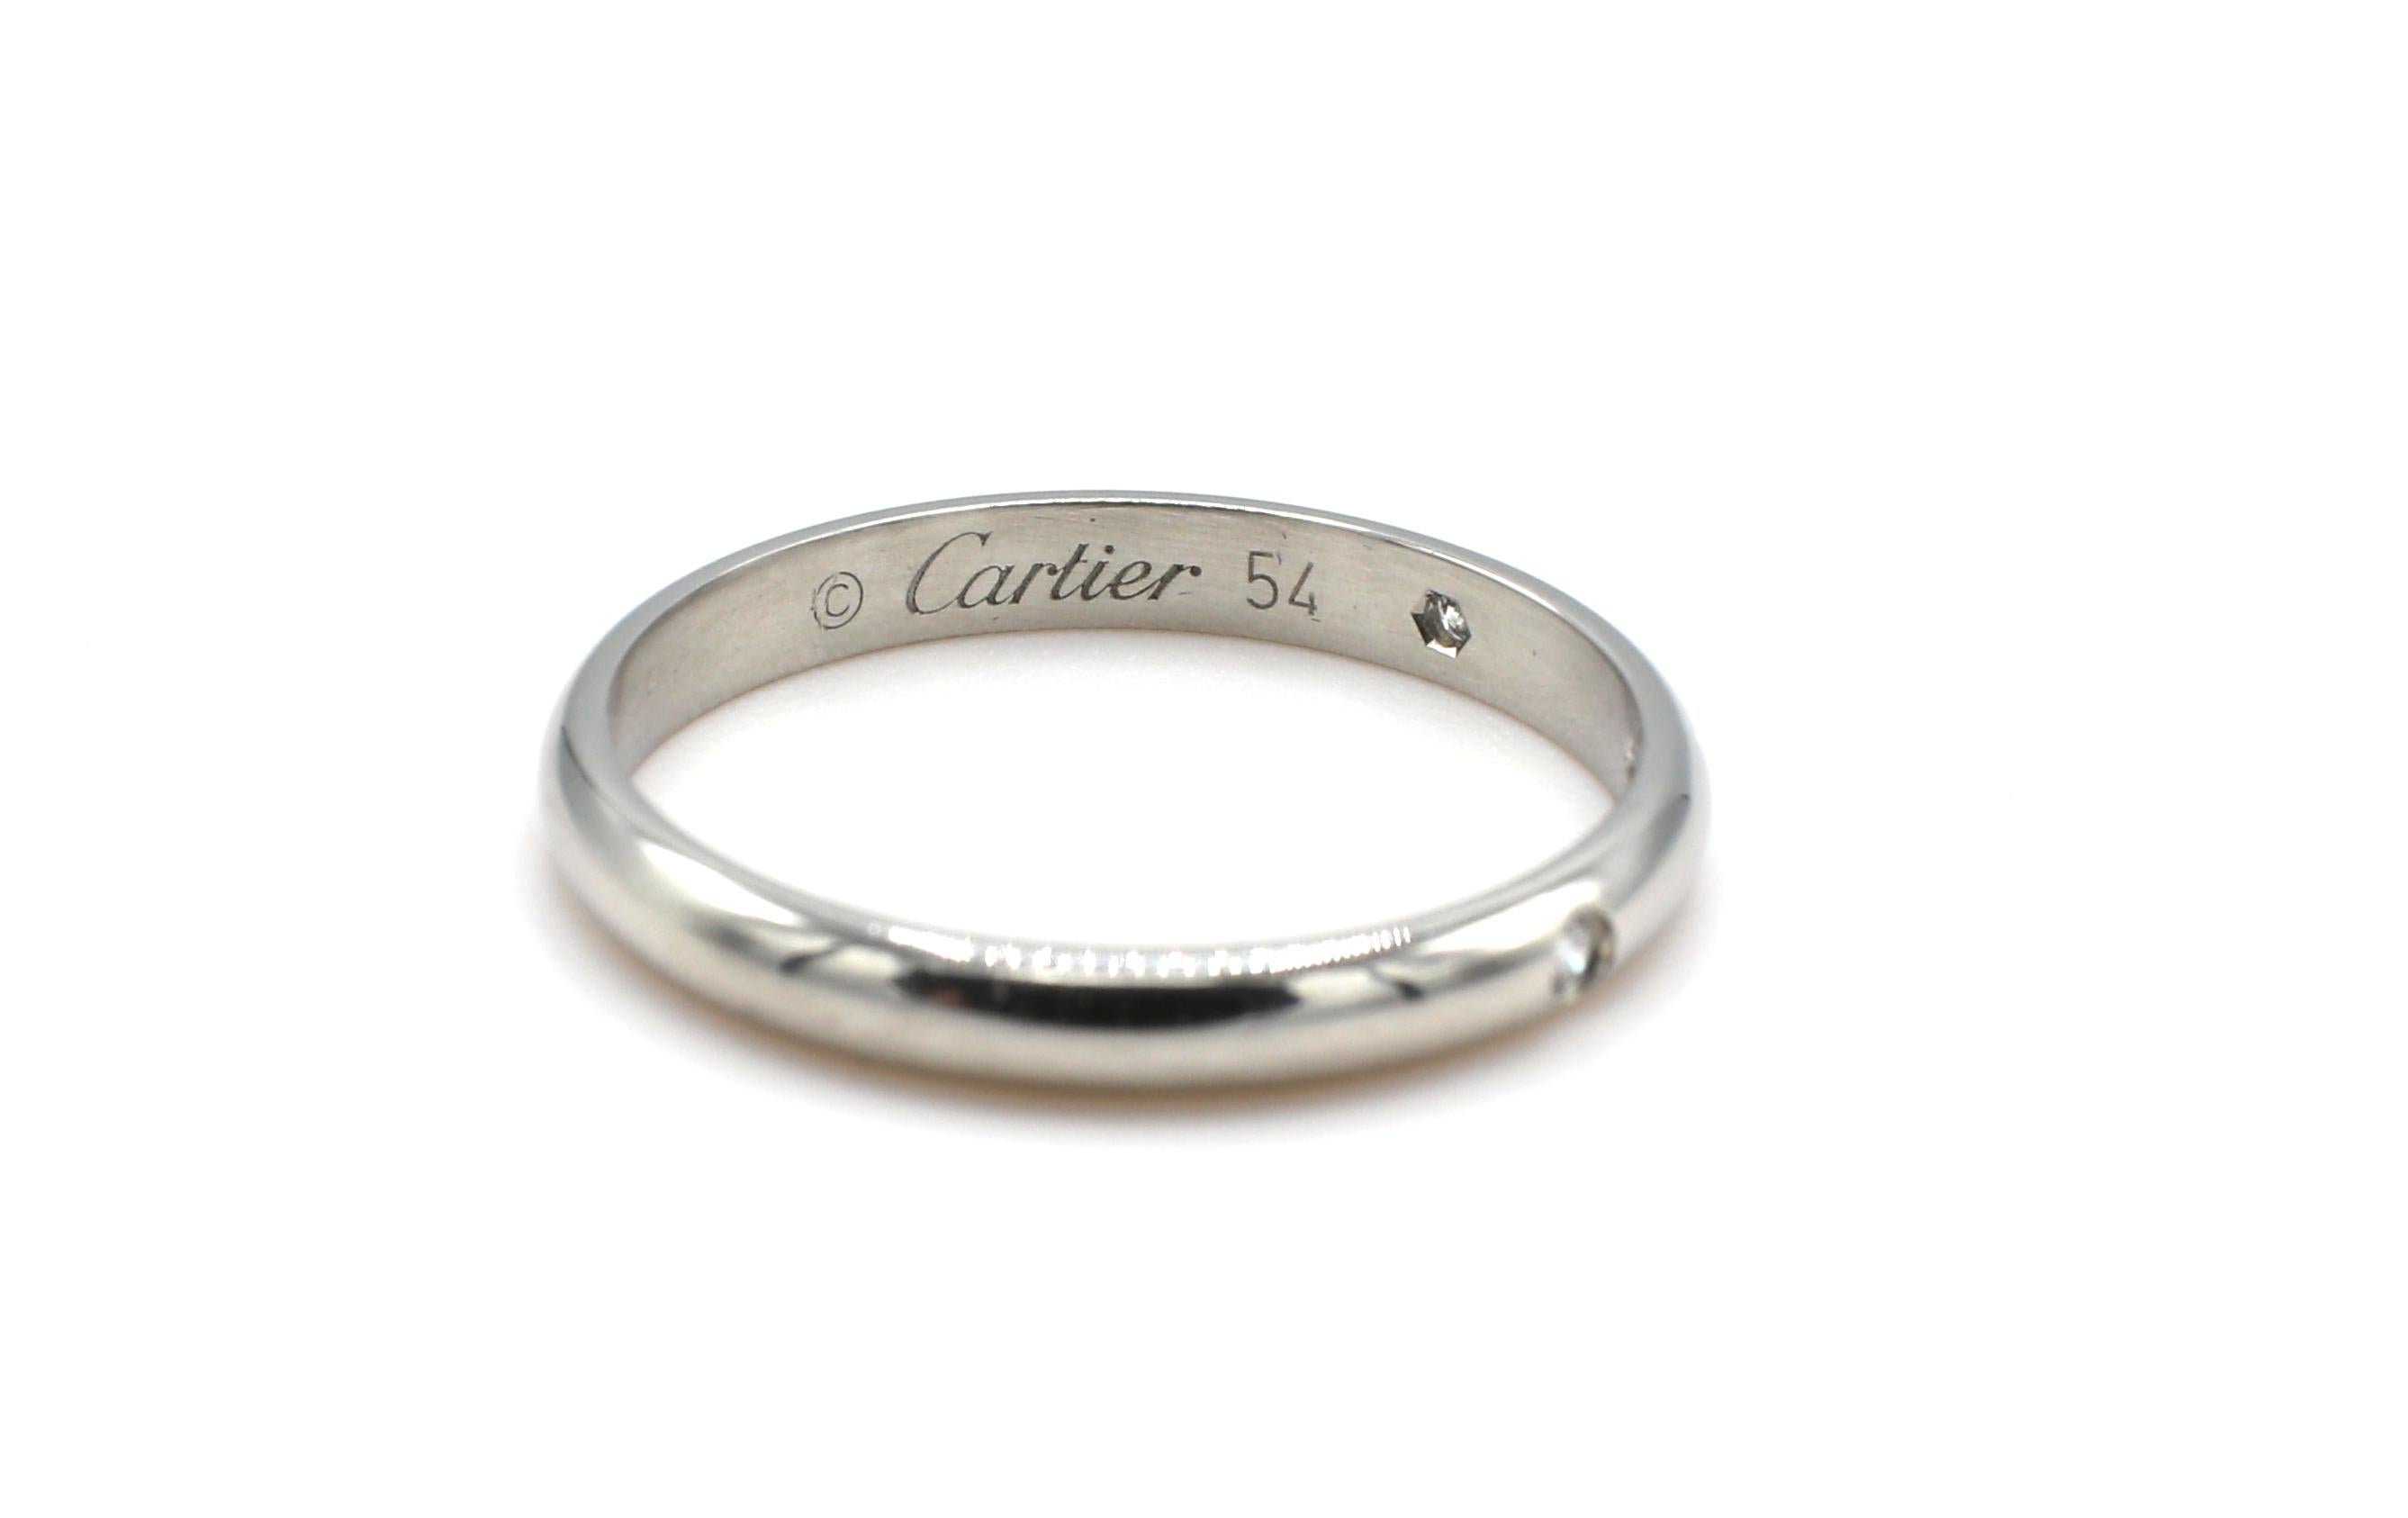 Cartier 1895 Platinum Diamond Wedding Band Ring 
Metal: Platinum 
Weight: 3.02 grams
Diamonds: 3 round brilliant cut diamonds, .03 CTW F-G VS
Width: 2.6MM
Signed: Cartier 54 HWF*** Pt950
Size: 54 (6.75 US)
Box & papers 
Retail: $1,650 USD

